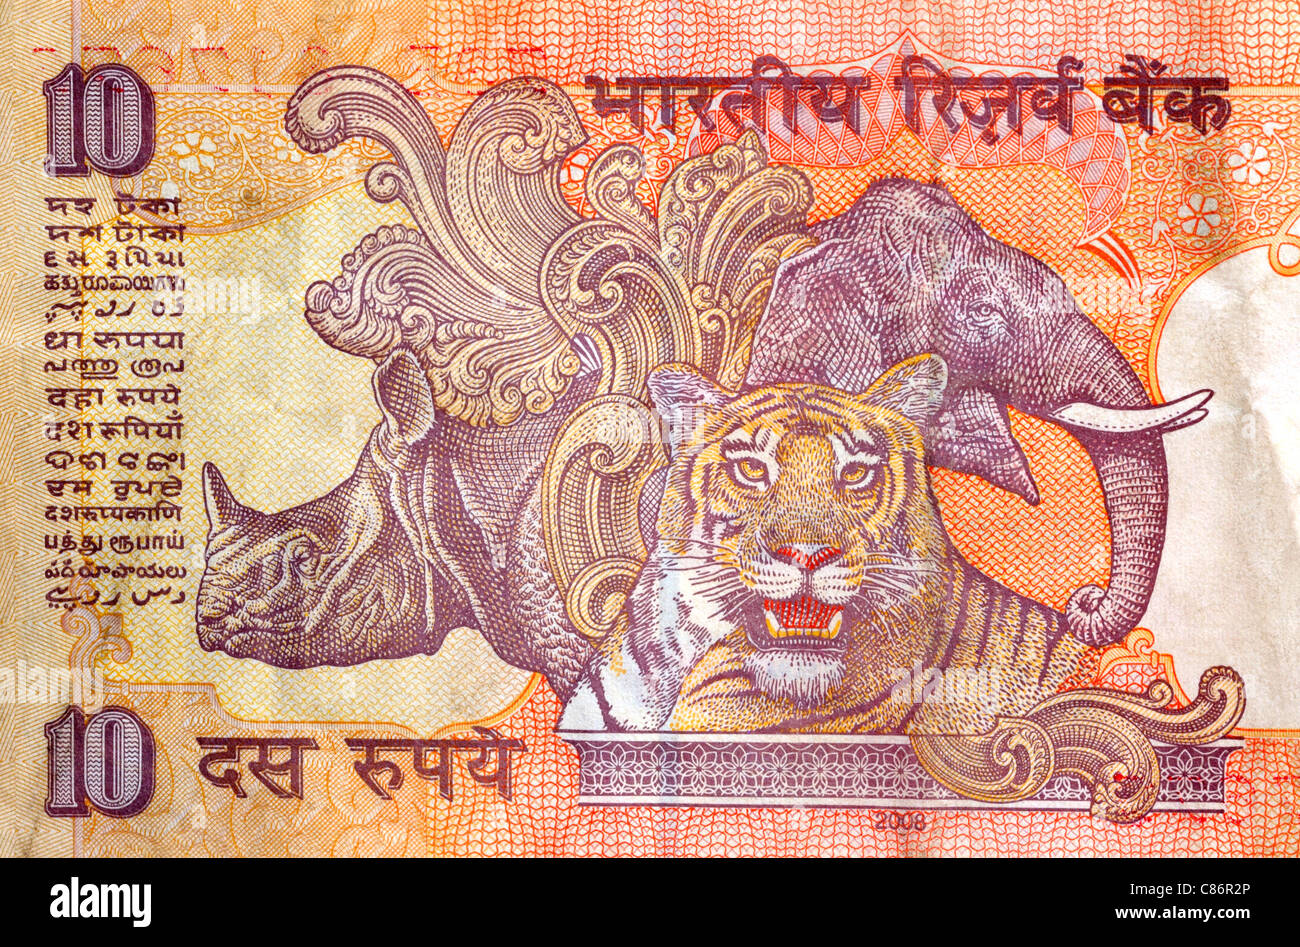 India 10 Ten Rupee Bank Note. Stock Photo